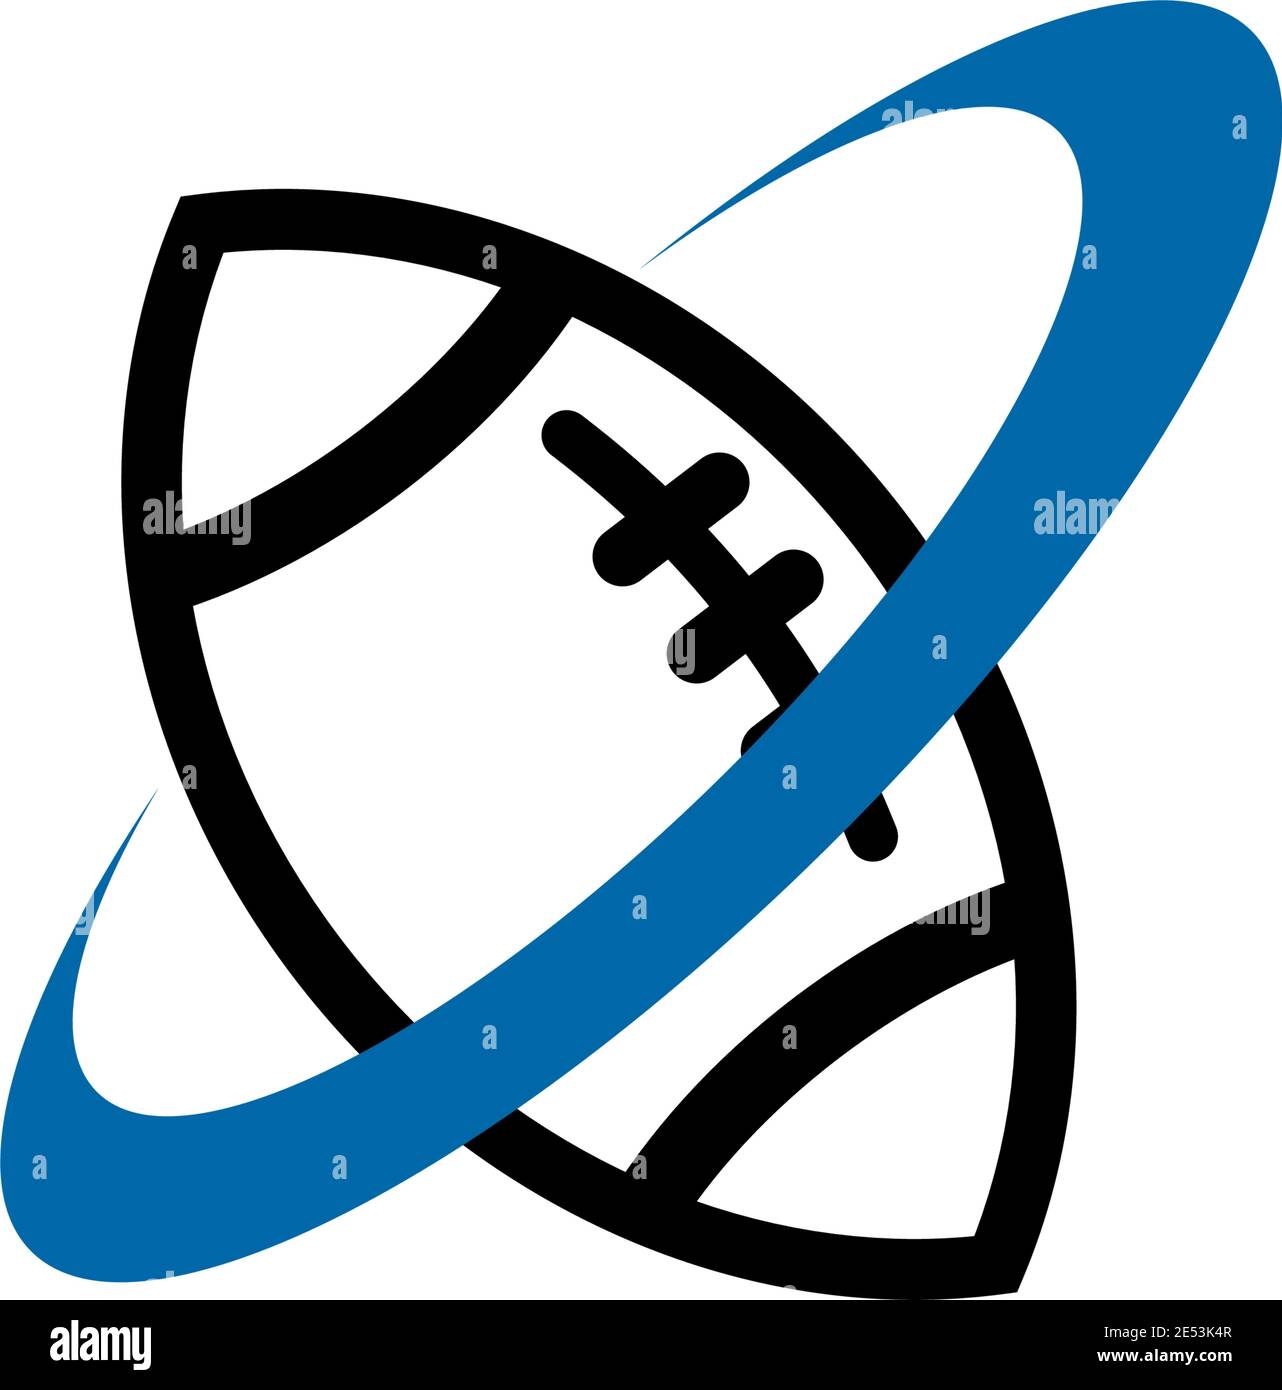 Rugby sport logo design inspiration vector template illustration Stock Vector